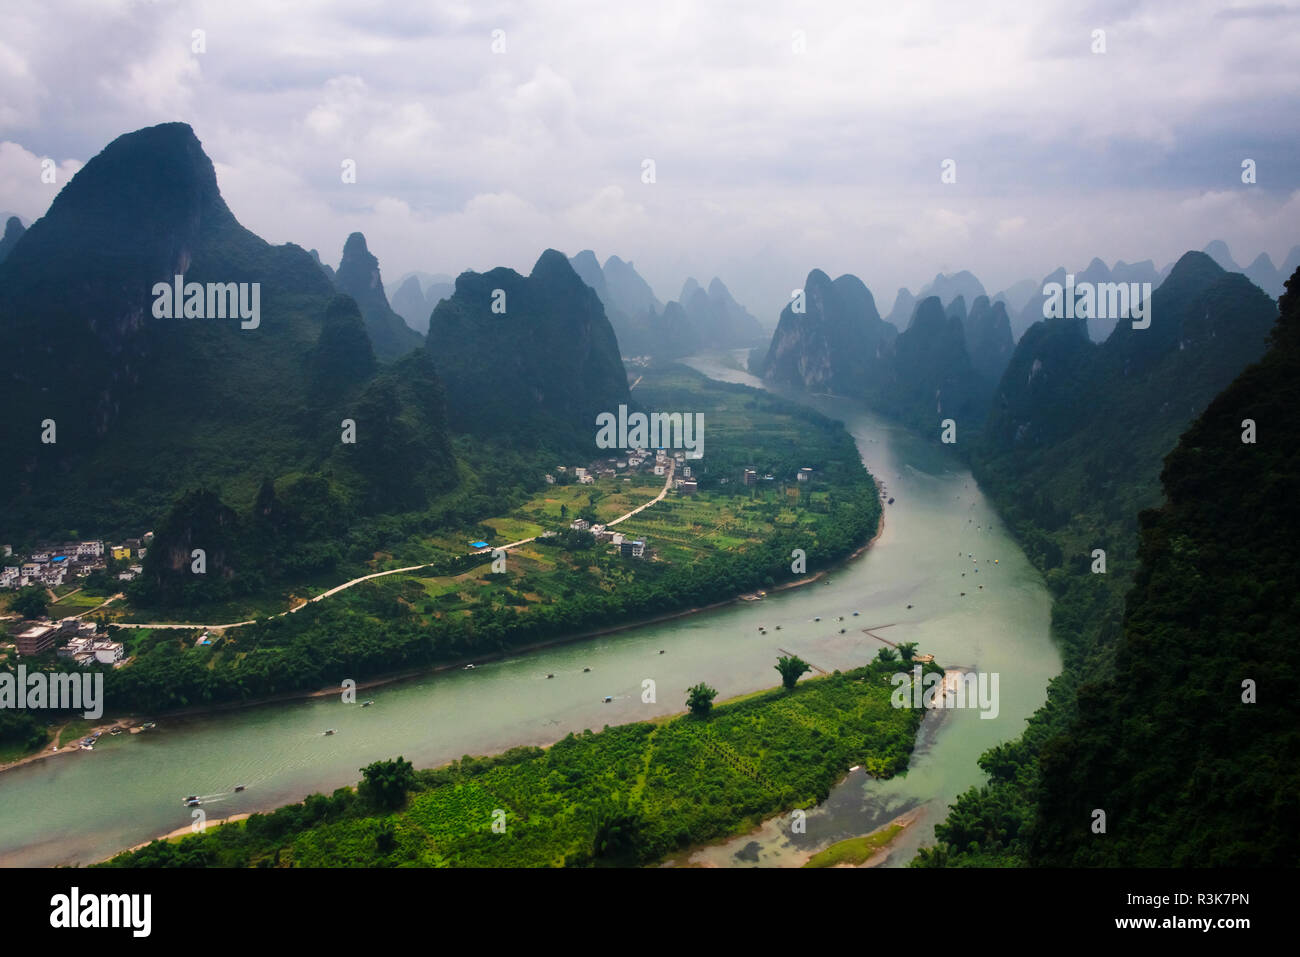 Li River with karst hills, Yangshuo, Guangxi Province, China Stock Photo